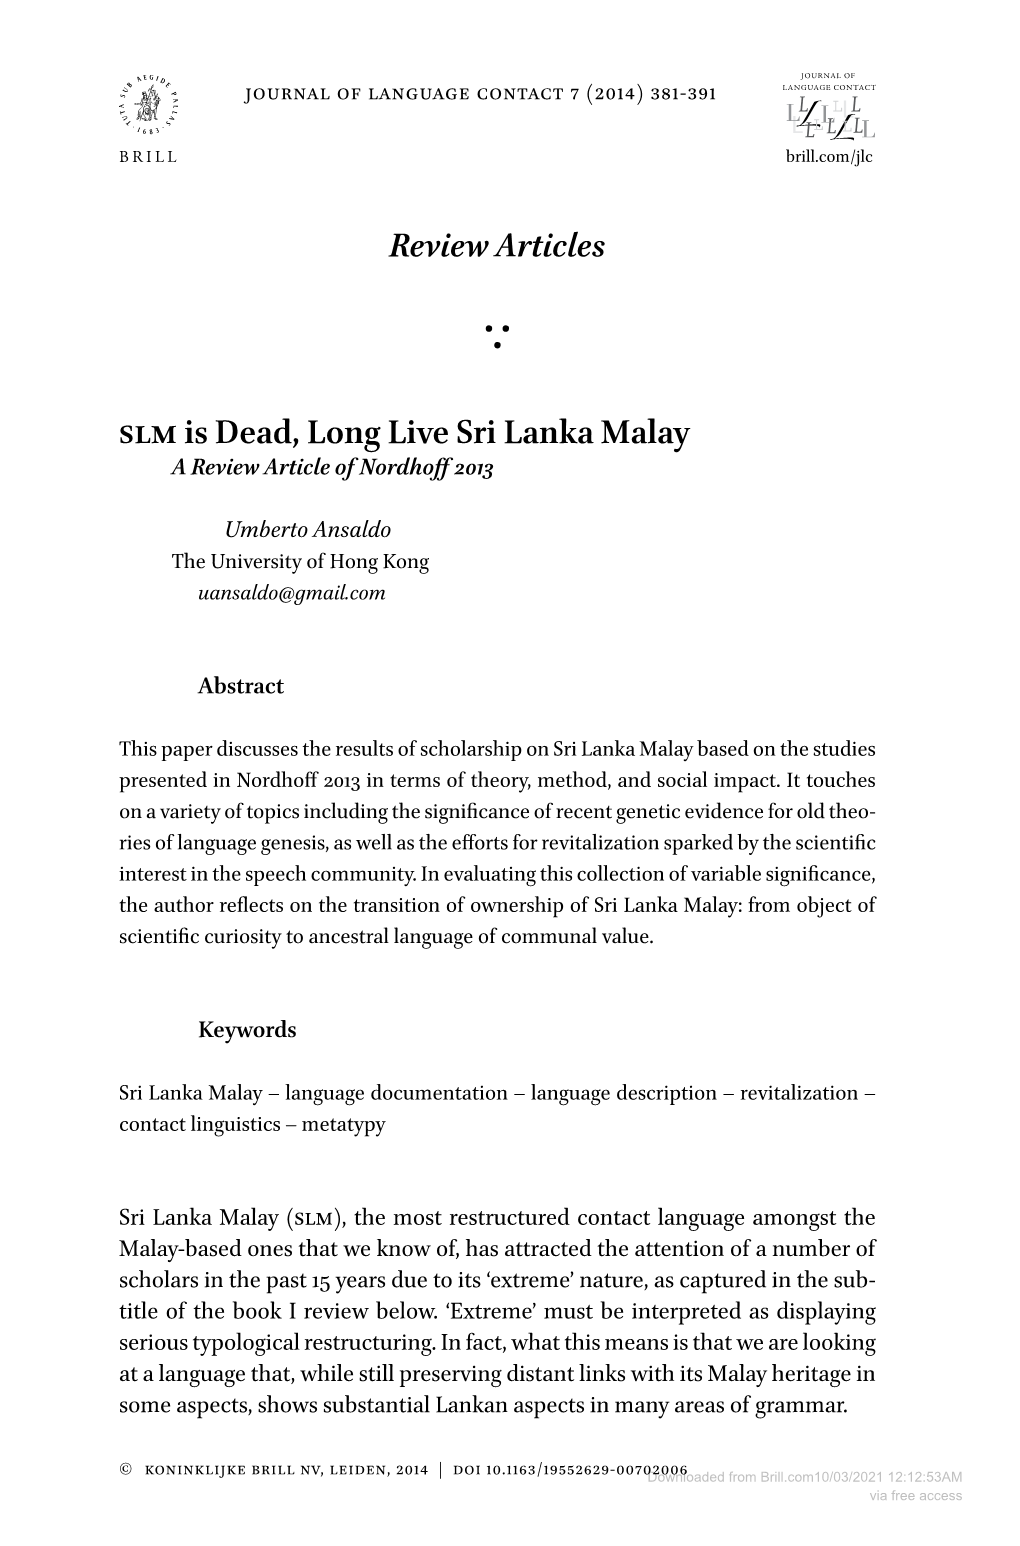 Review Articles Slm Is Dead, Long Live Sri Lanka Malay